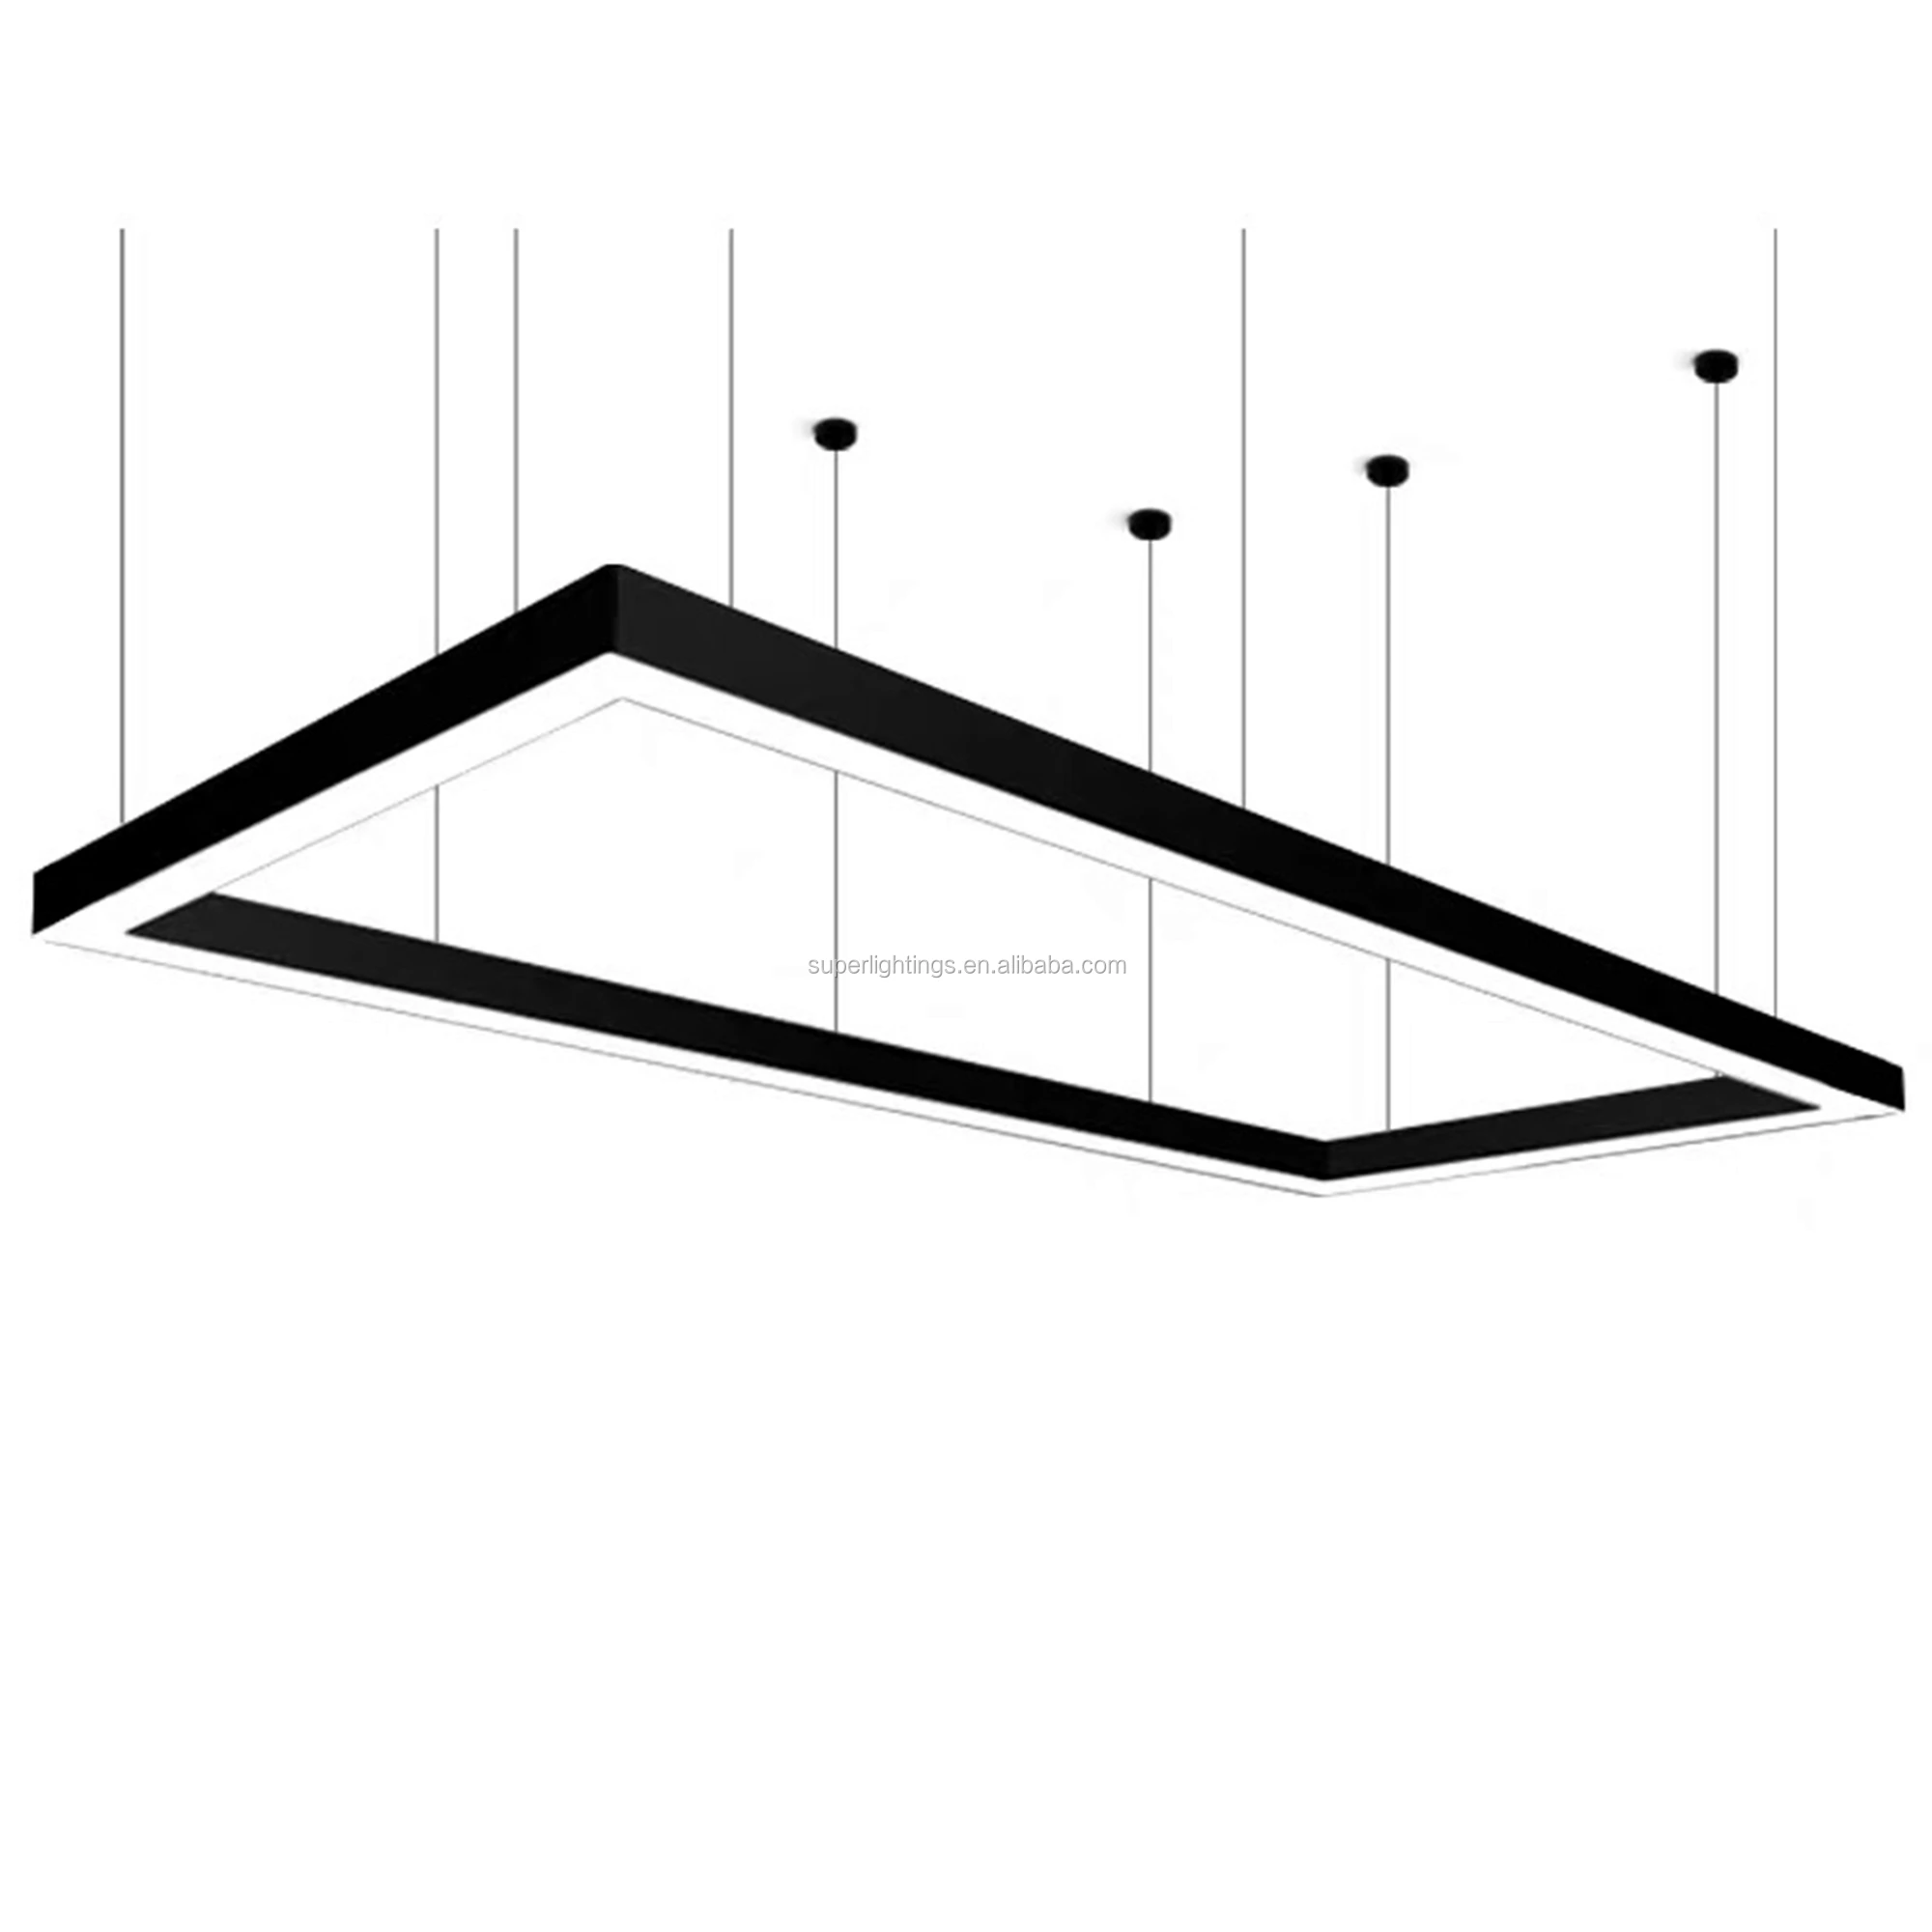 L15A led architecture lighting system design solution international project chain linear light fixture pendant lamp chandelier